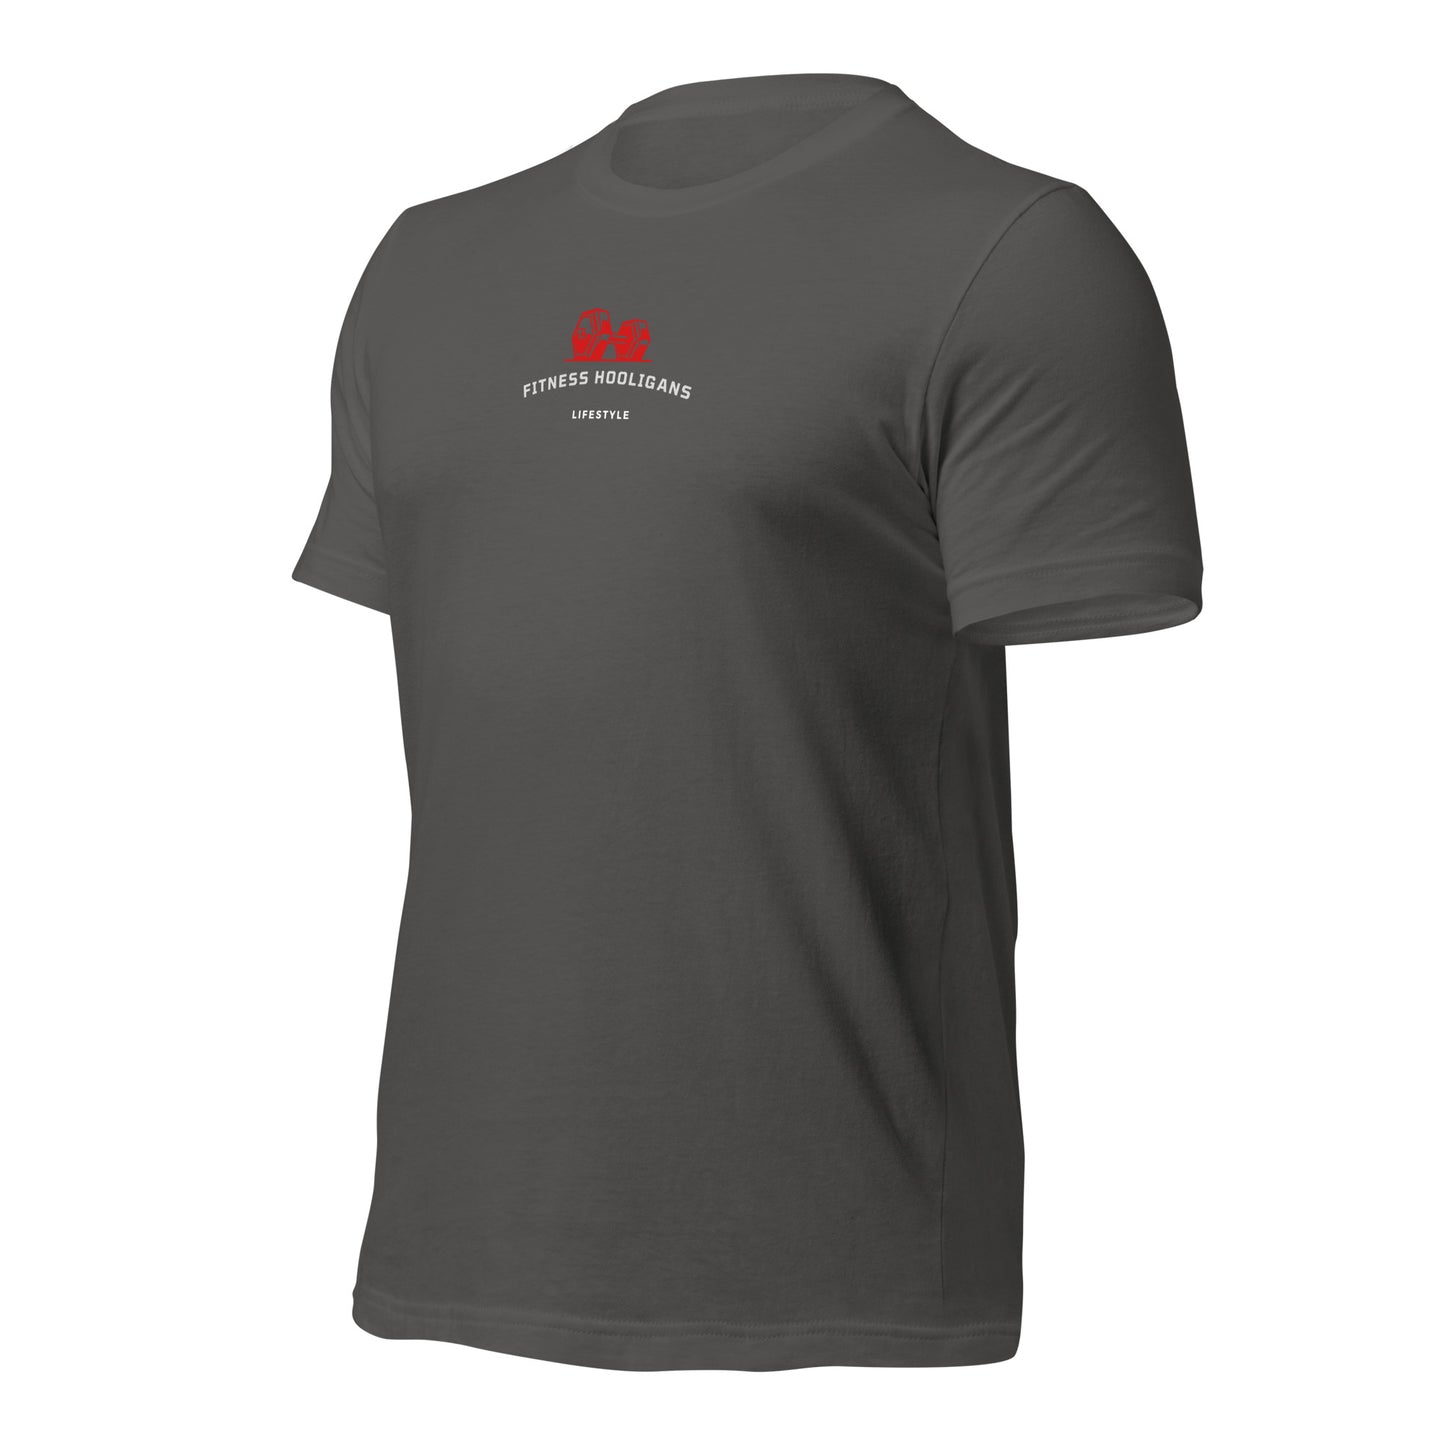 Unisex Fitness Hooligans t-shirt